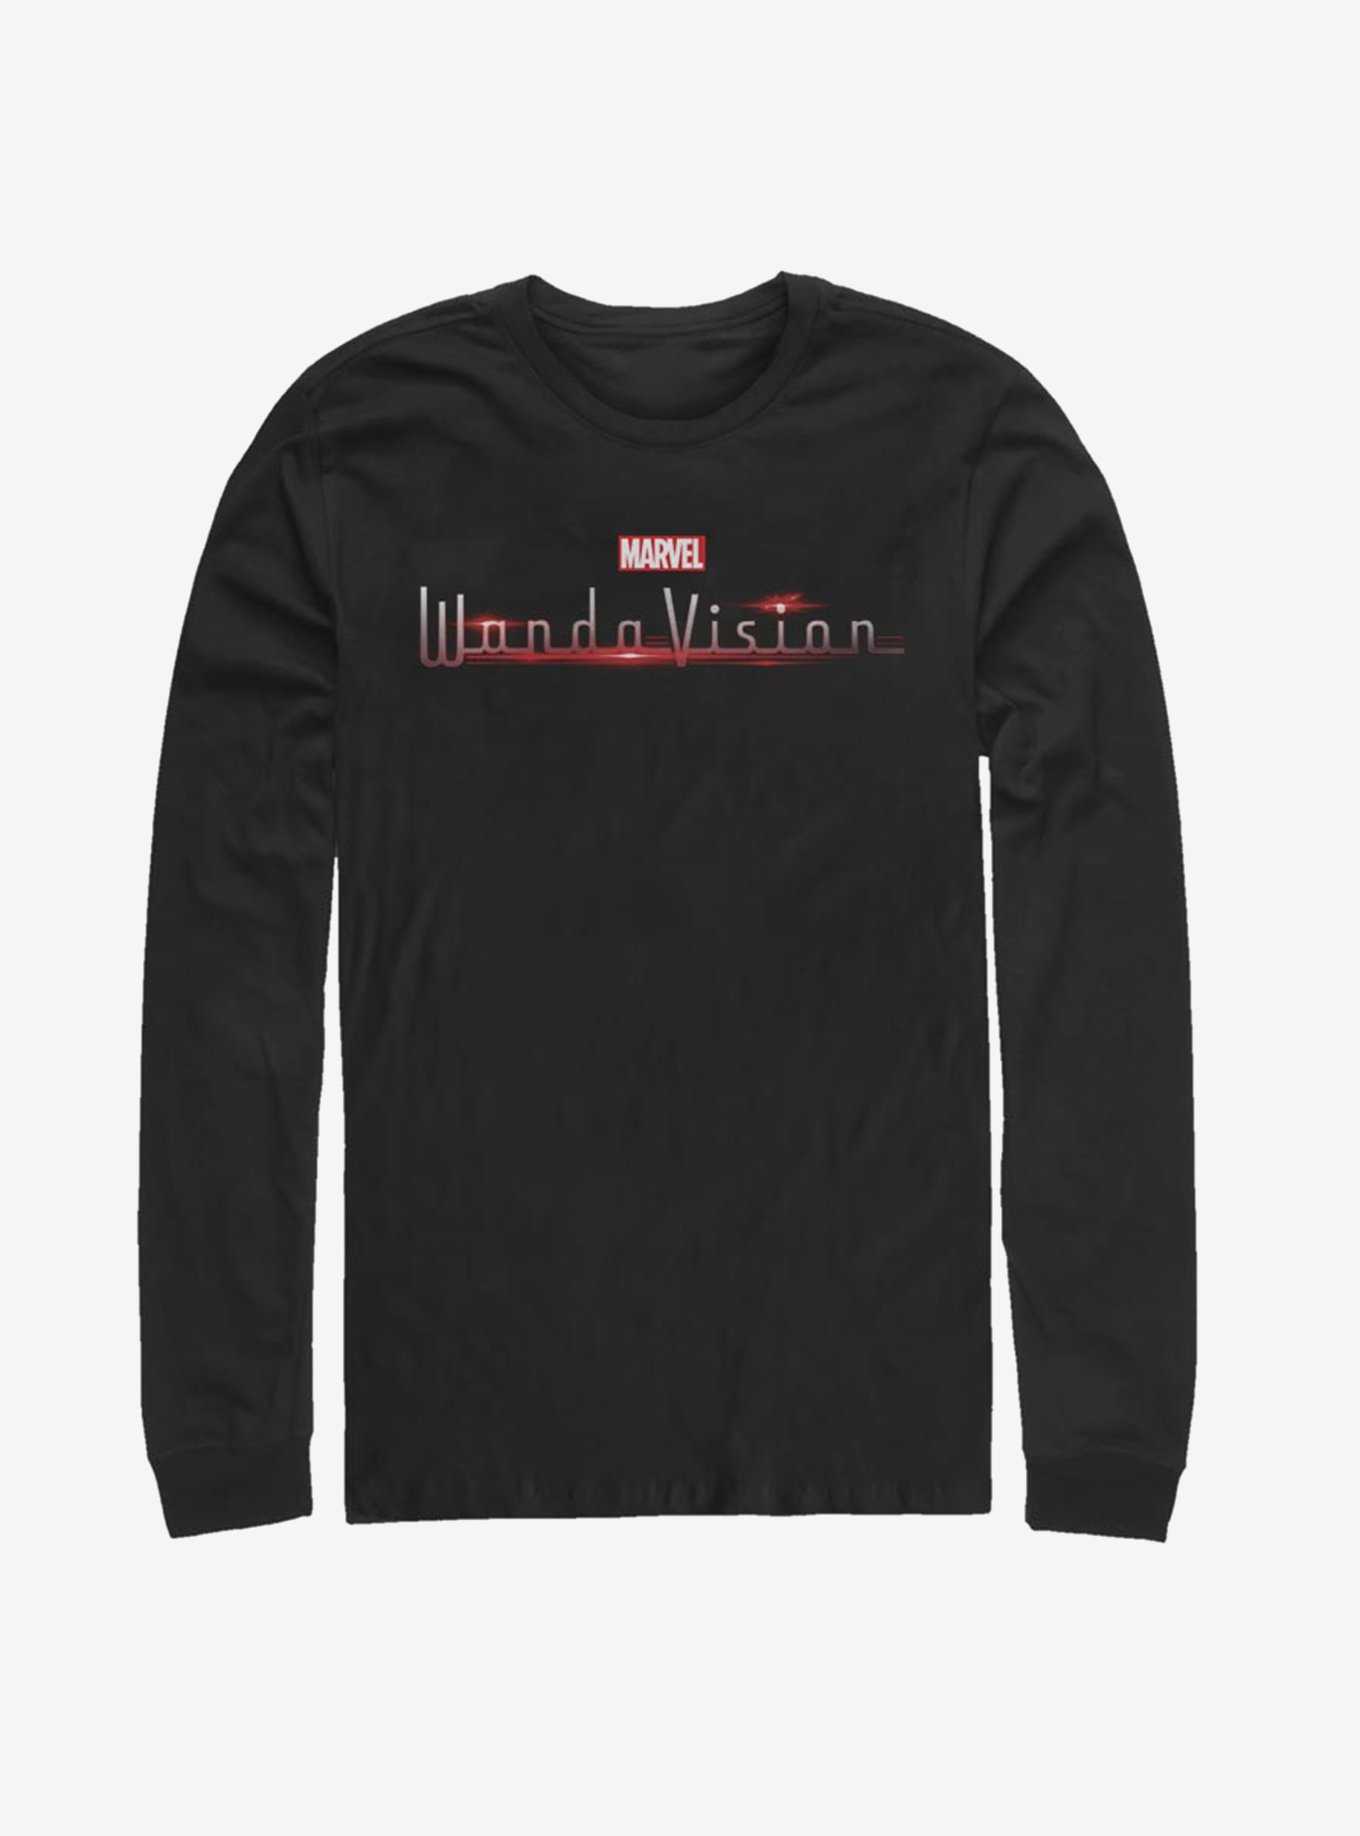 Marvel WandaVision Long-Sleeve T-Shirt, , hi-res